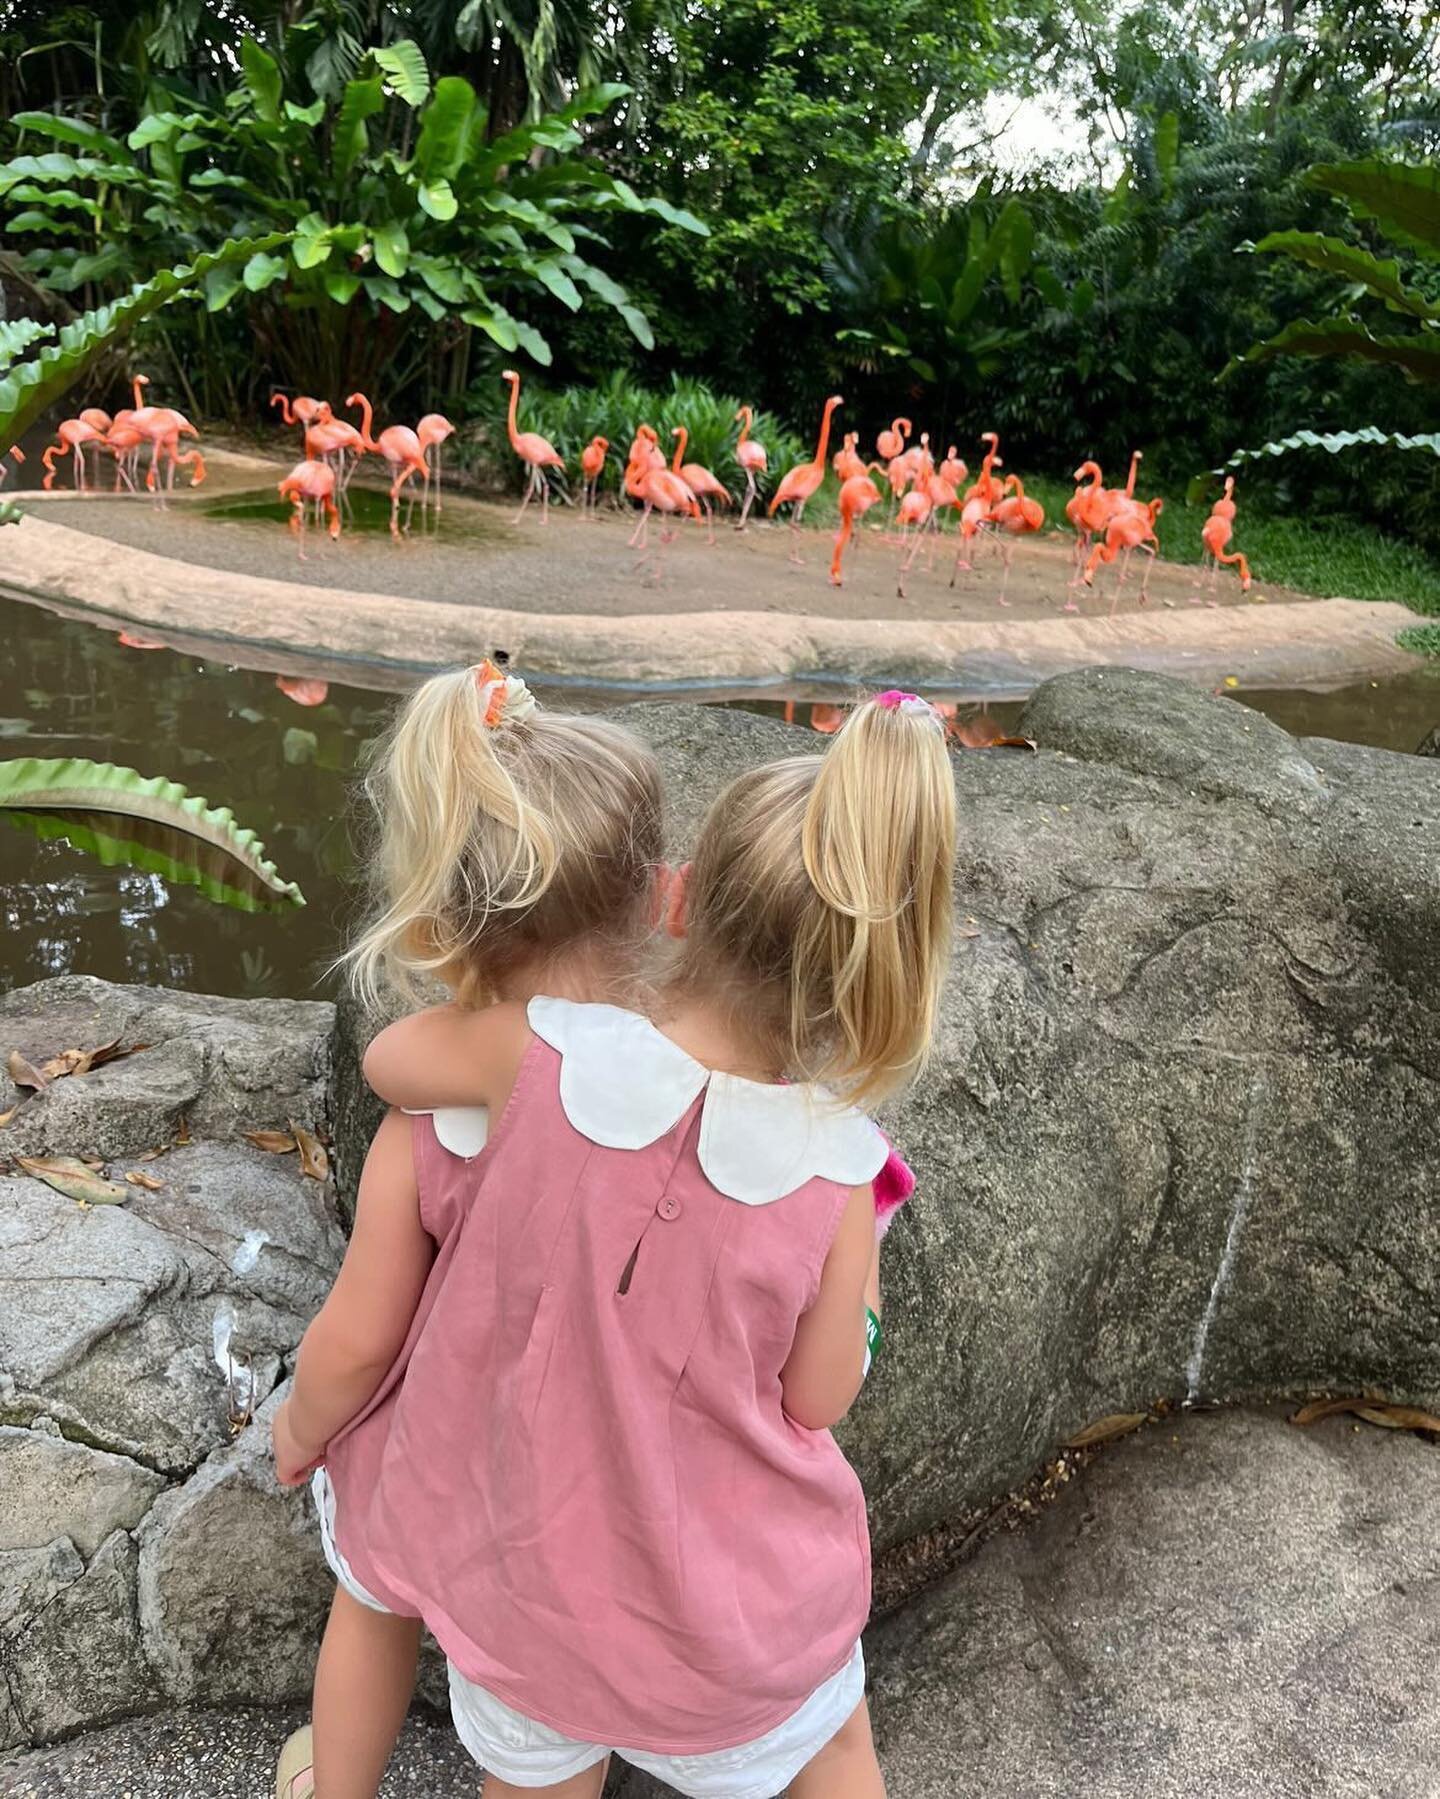 The sweetest Vivi and Vale, twinning in Tiffany&rsquo;s Precious Pintuck Tops at the Bird Park. 

#ChildrenofLuna #COLchildrenswear #childrenoflunasg #colgifting